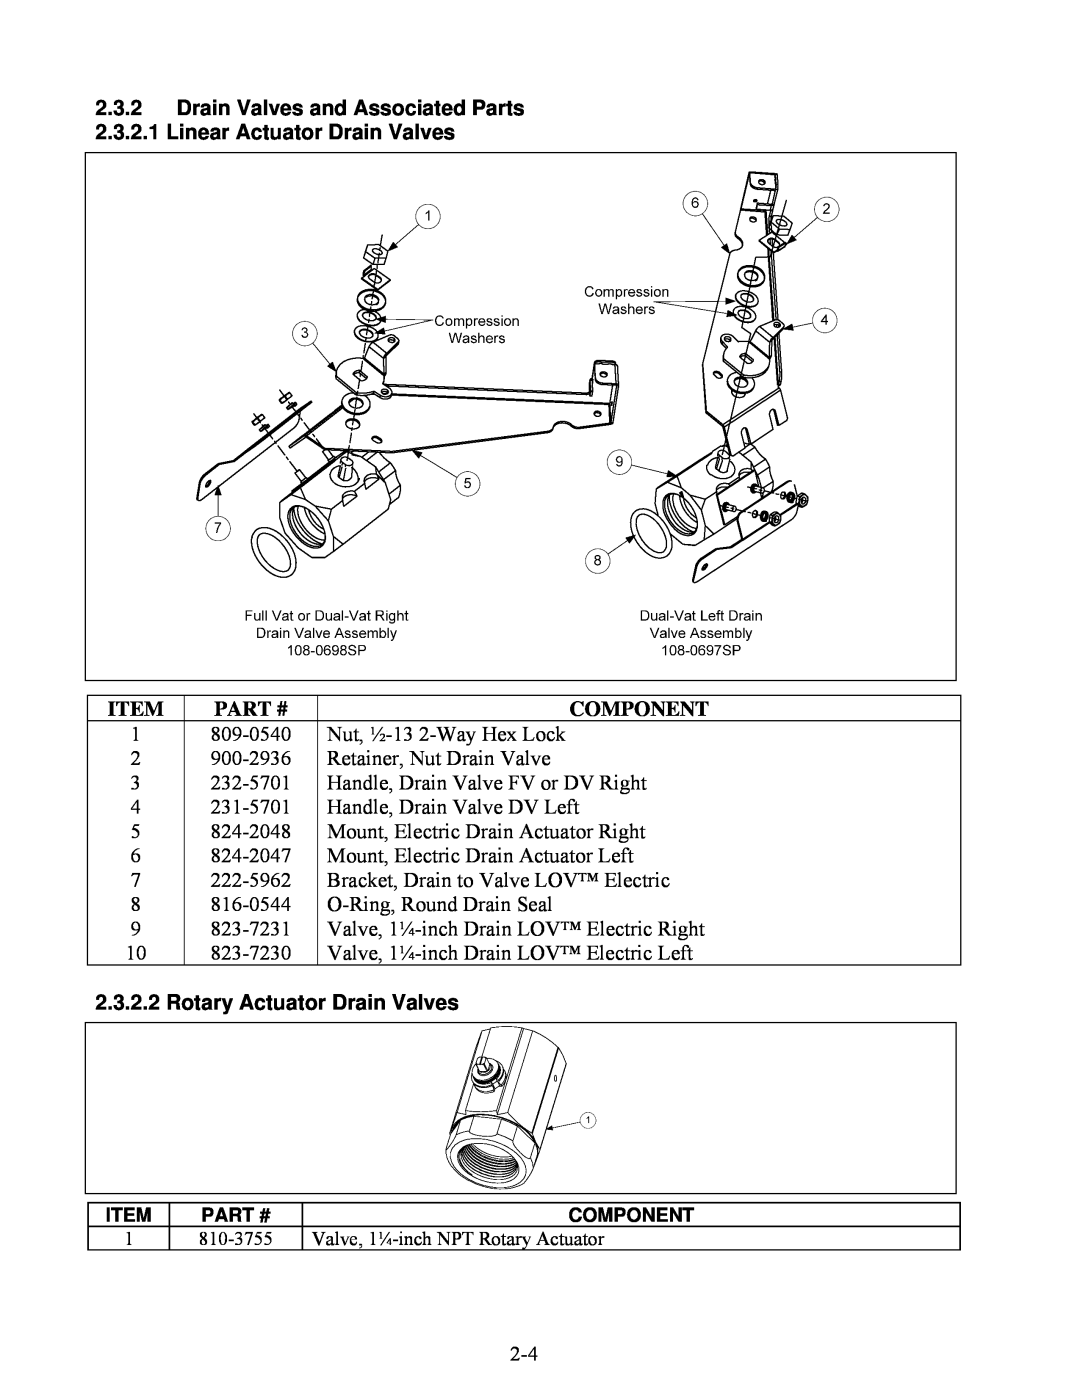 Frymaster BIELA14 manual Rotary Actuator Drain Valves, Item, Part #, Component 